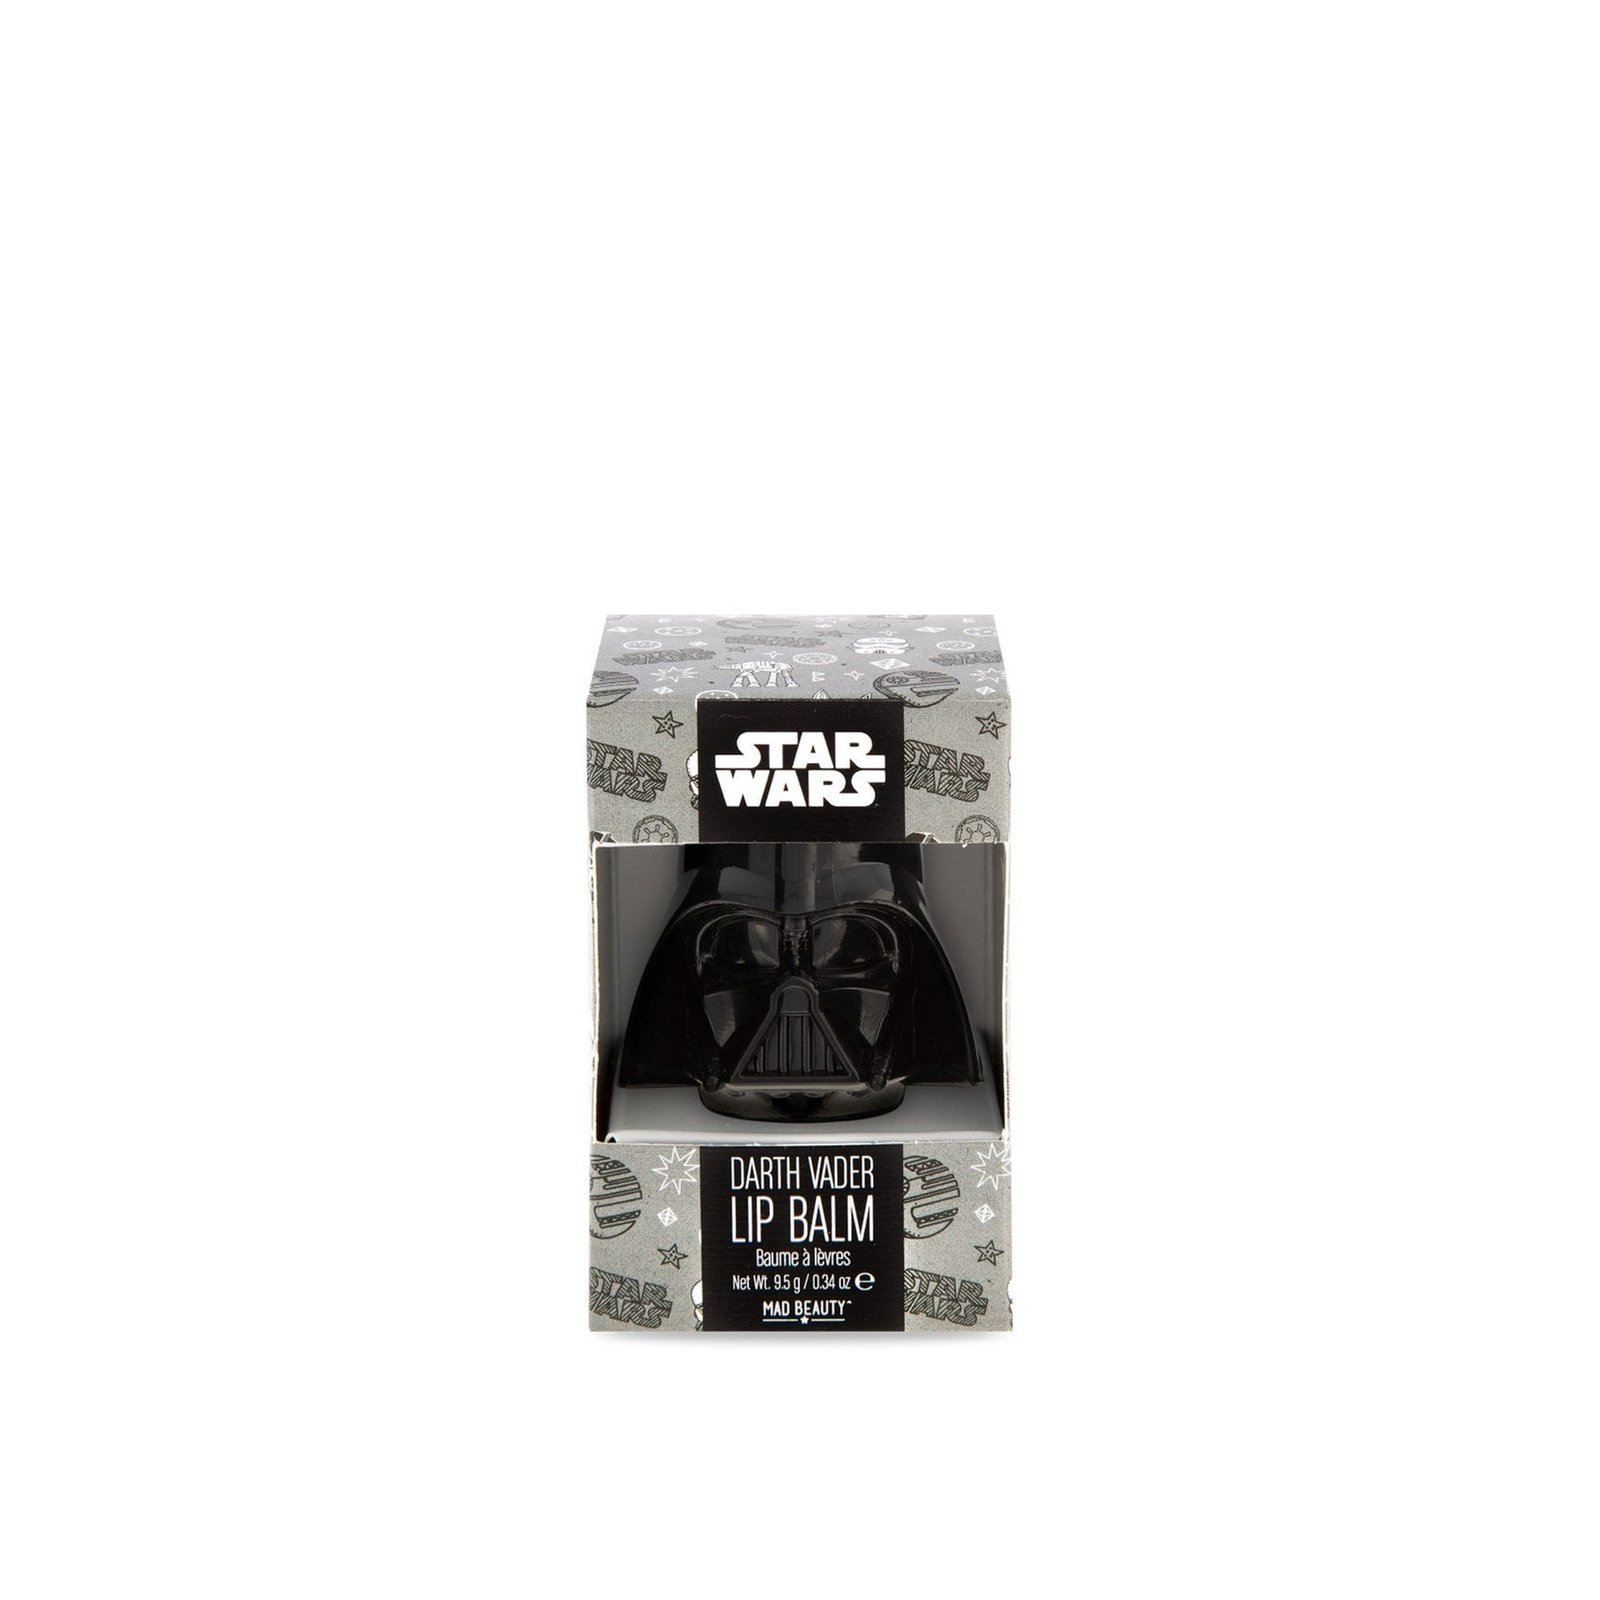 Mad Beauty Star Wars Darth Vader Lip Balm 9.5g (0.34 oz)